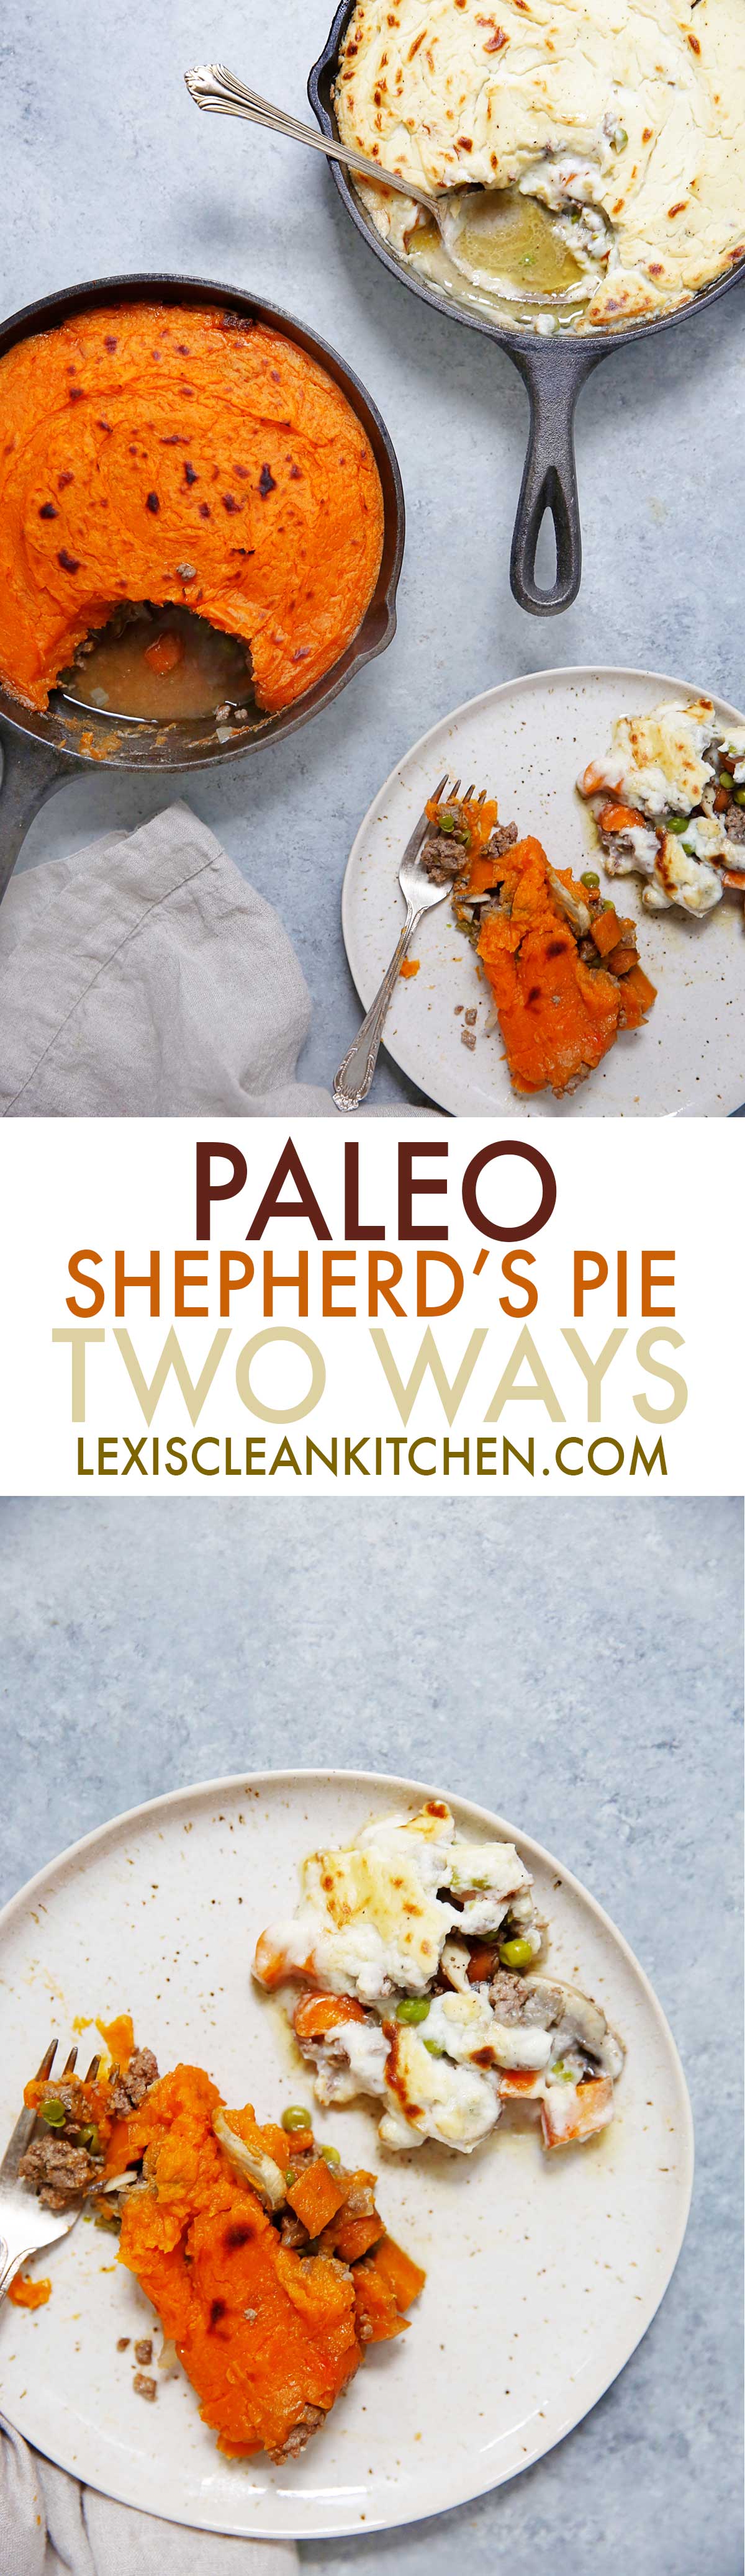 Shepherd S Pie Two Ways Lexi S Clean Kitchen